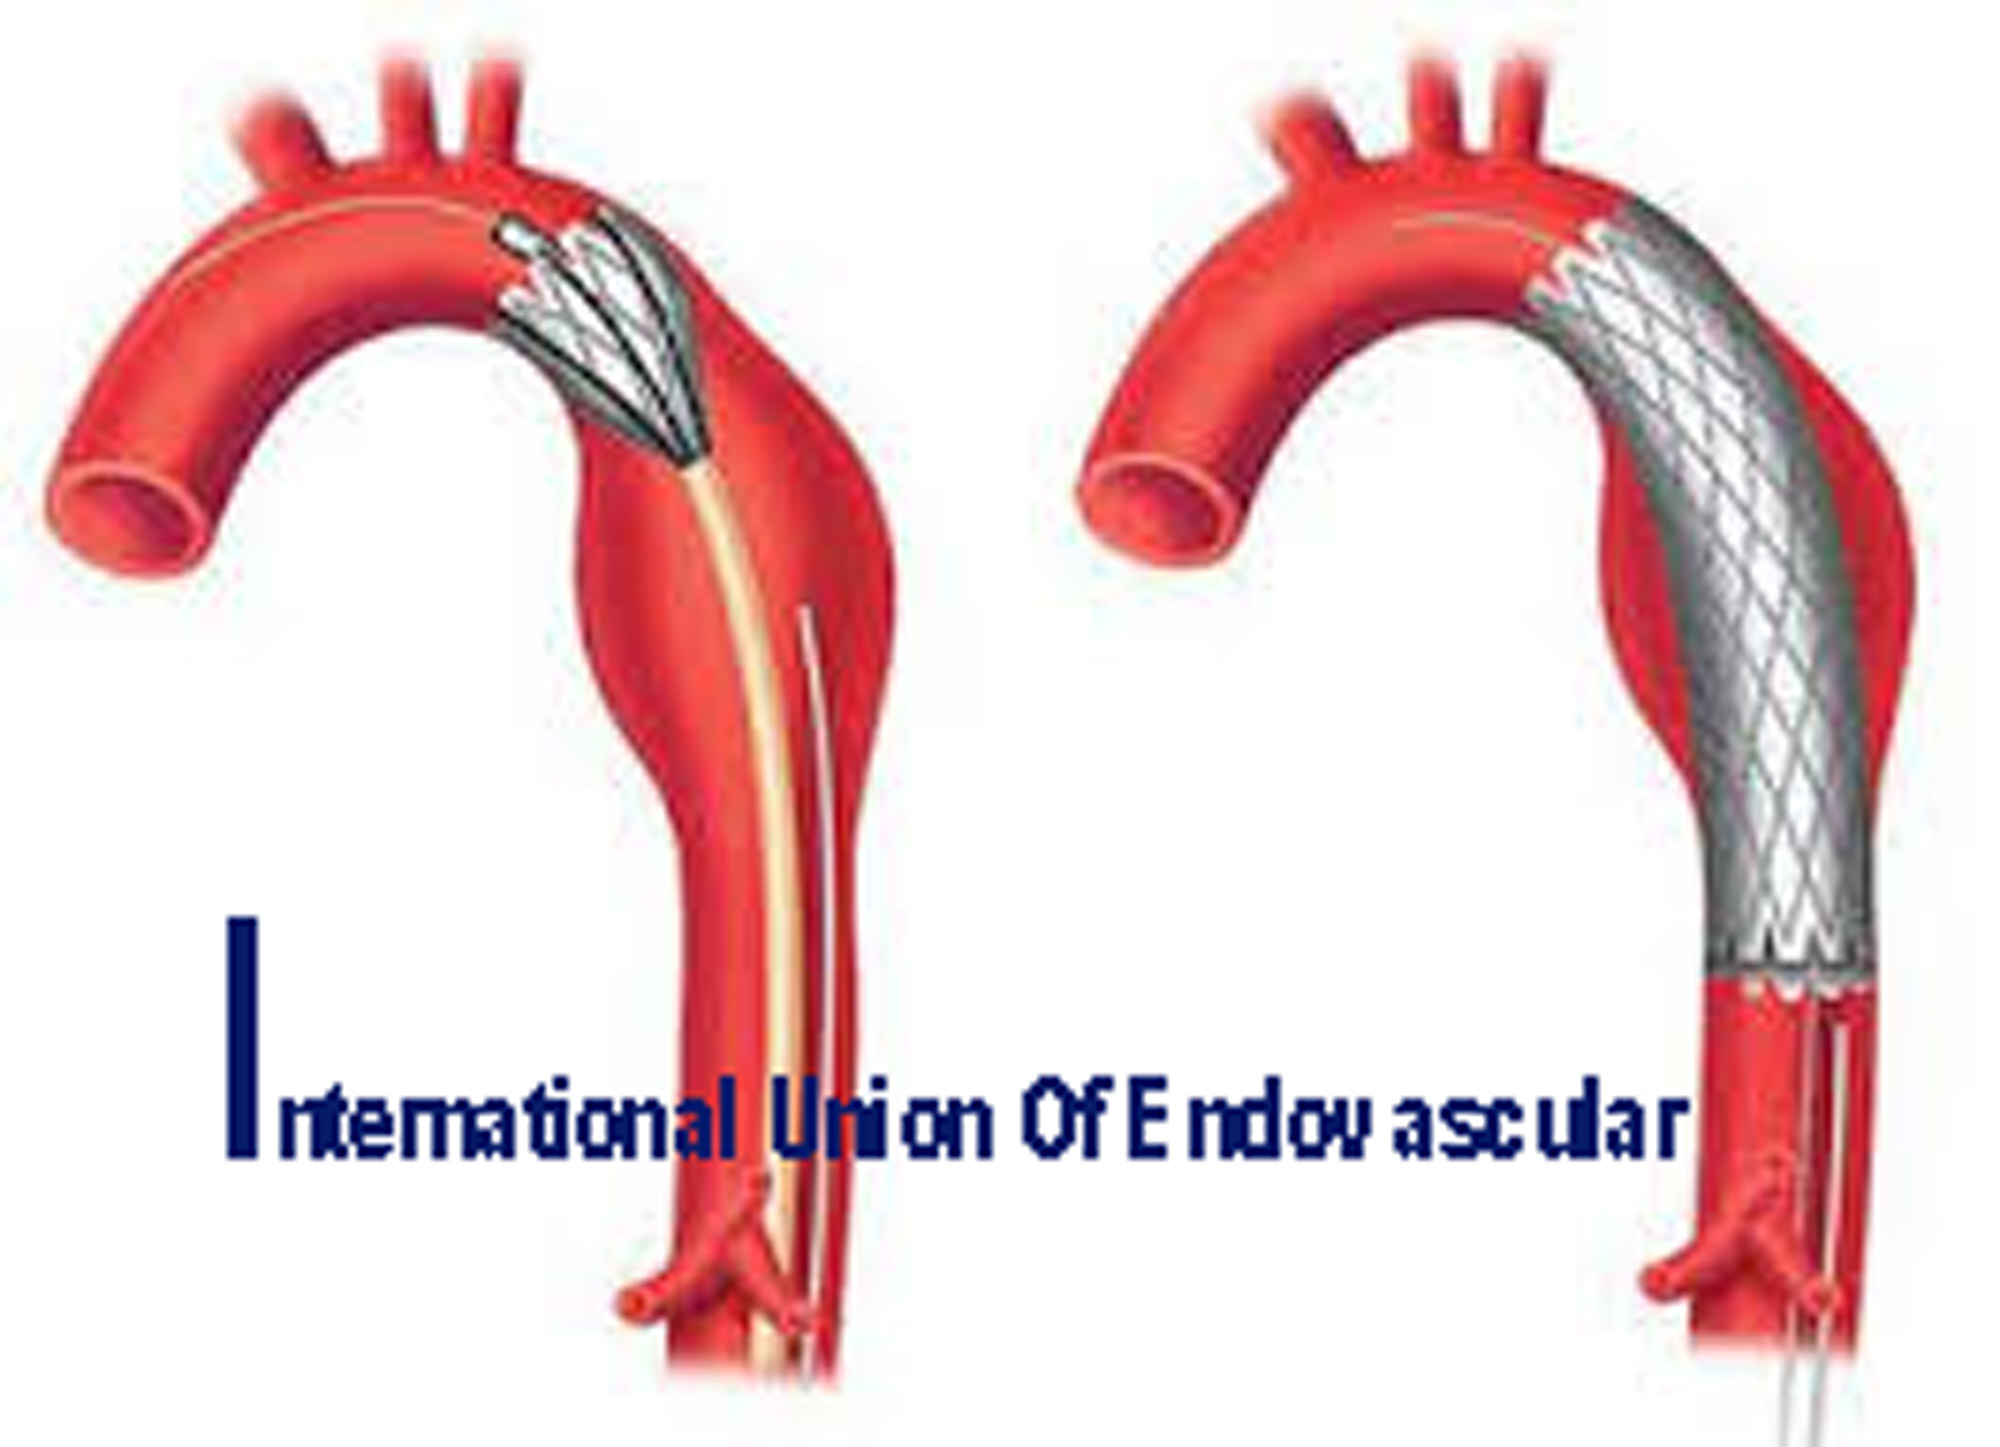 International Union Of Endovascular